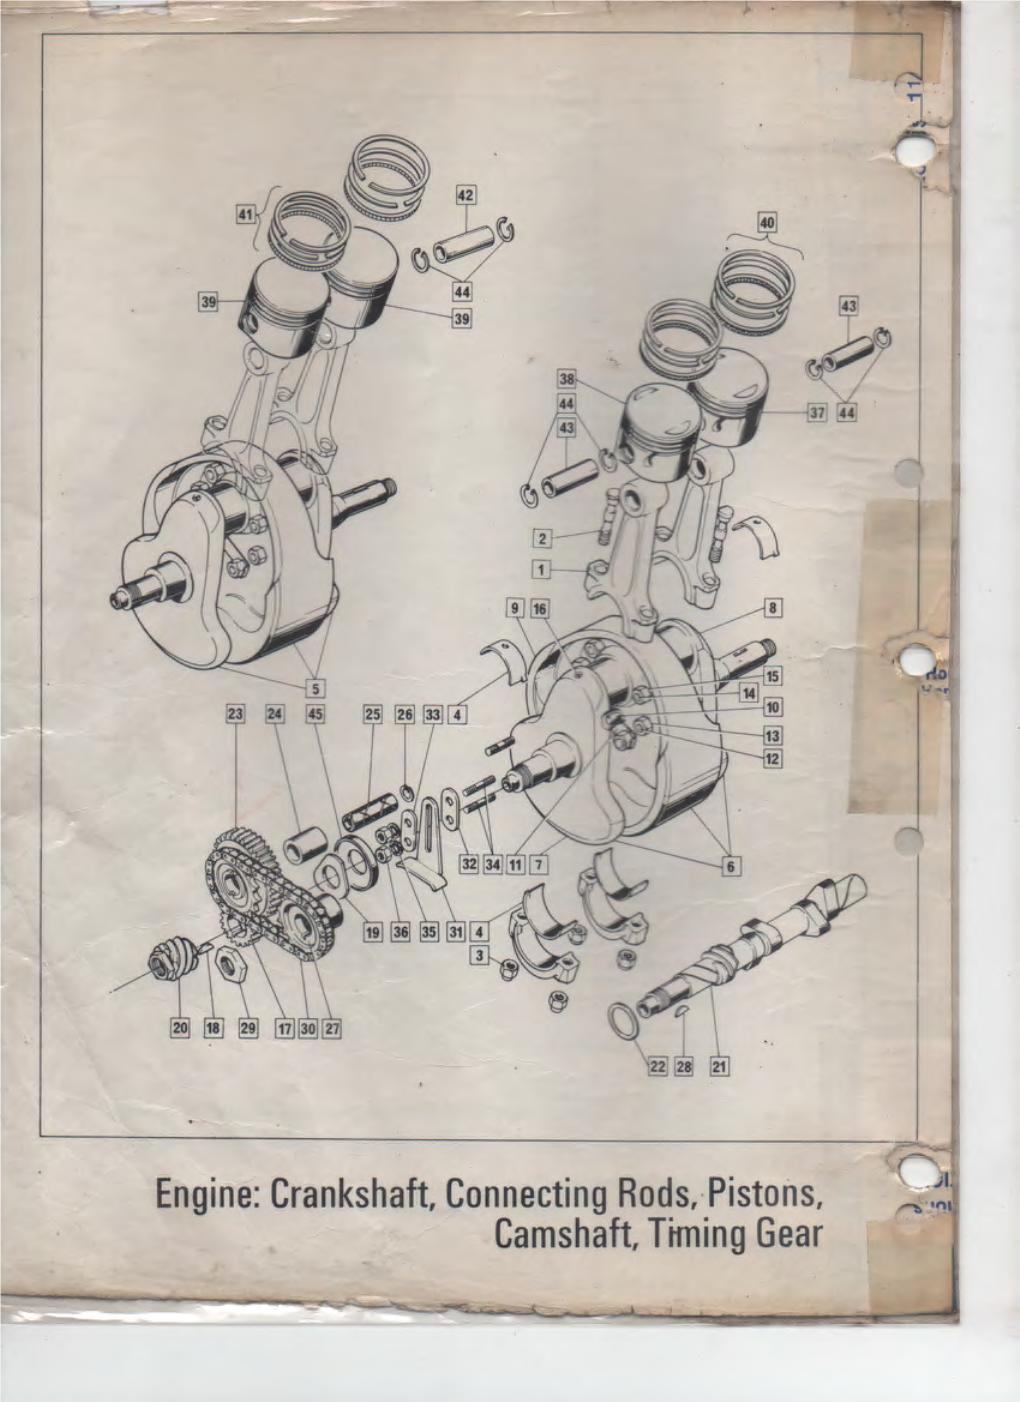 Engine: Crankshaft, Connecting Rods, Pistons, Camshaft, Ttming Gear